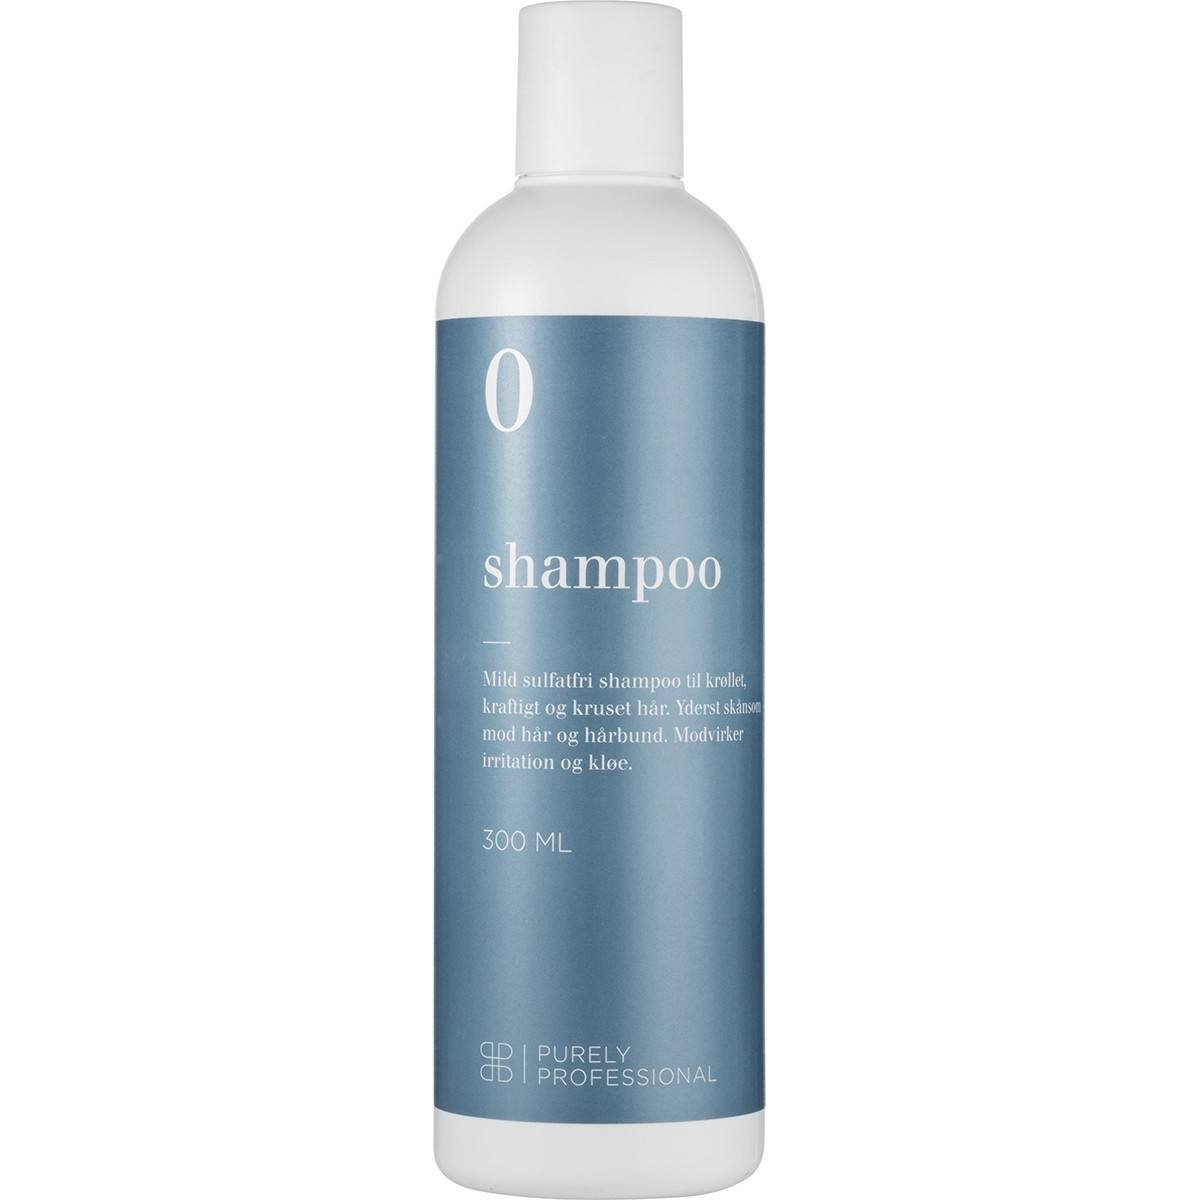 Purely Professional Shampo 0 Sulfatfri shampo 300 ml.